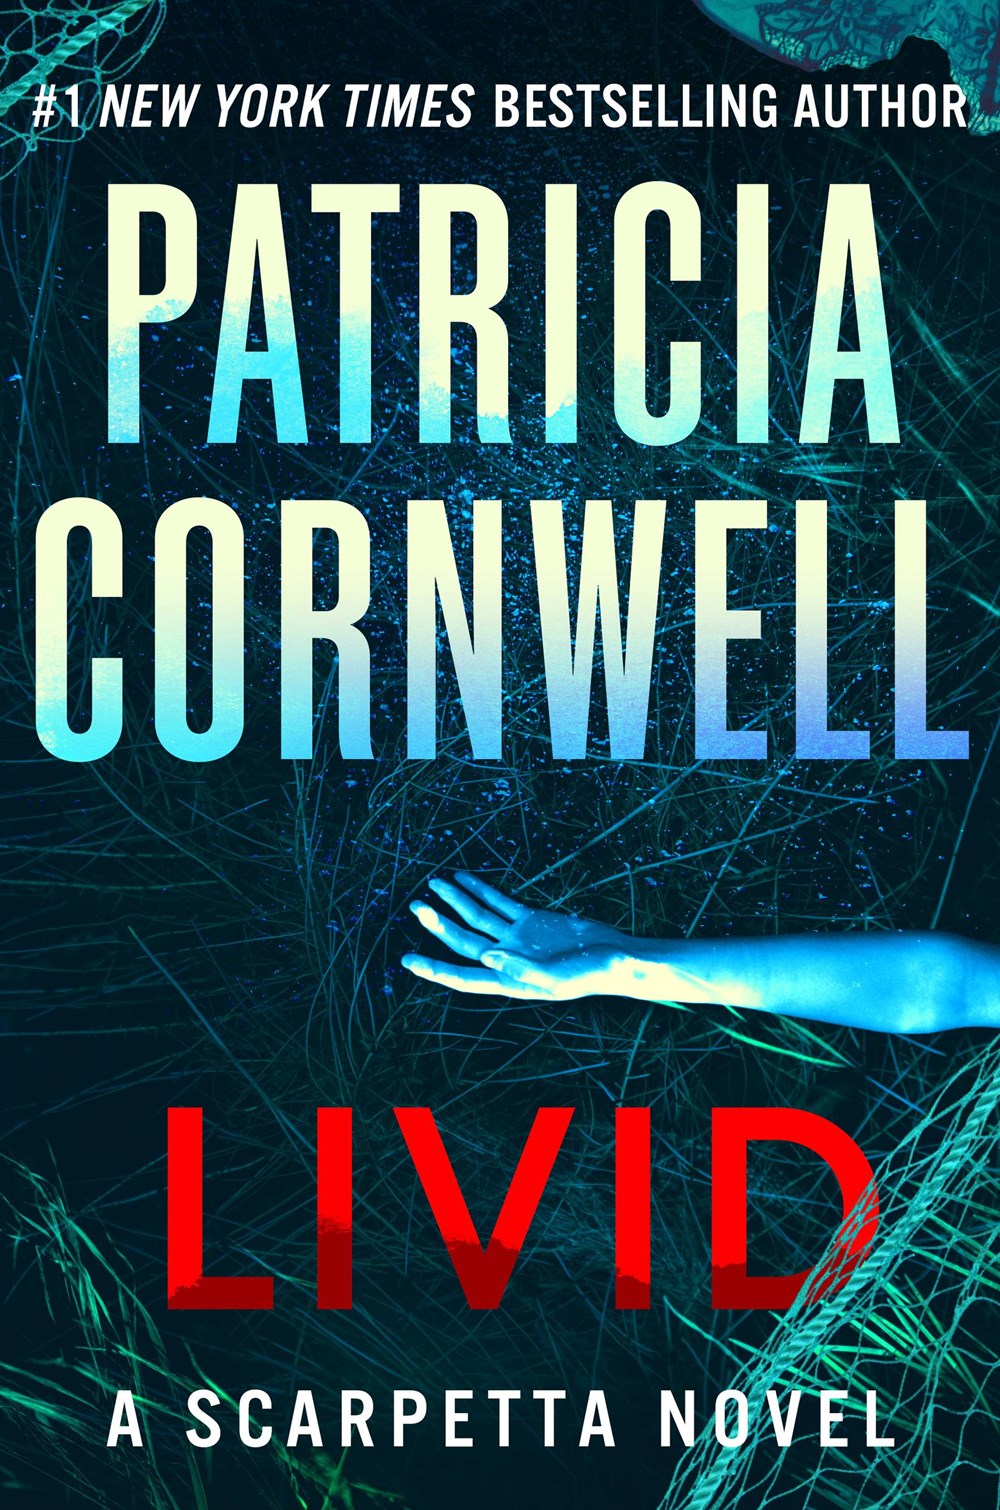 Livid : A Scarpetta Novel | Cornwell, Patricia